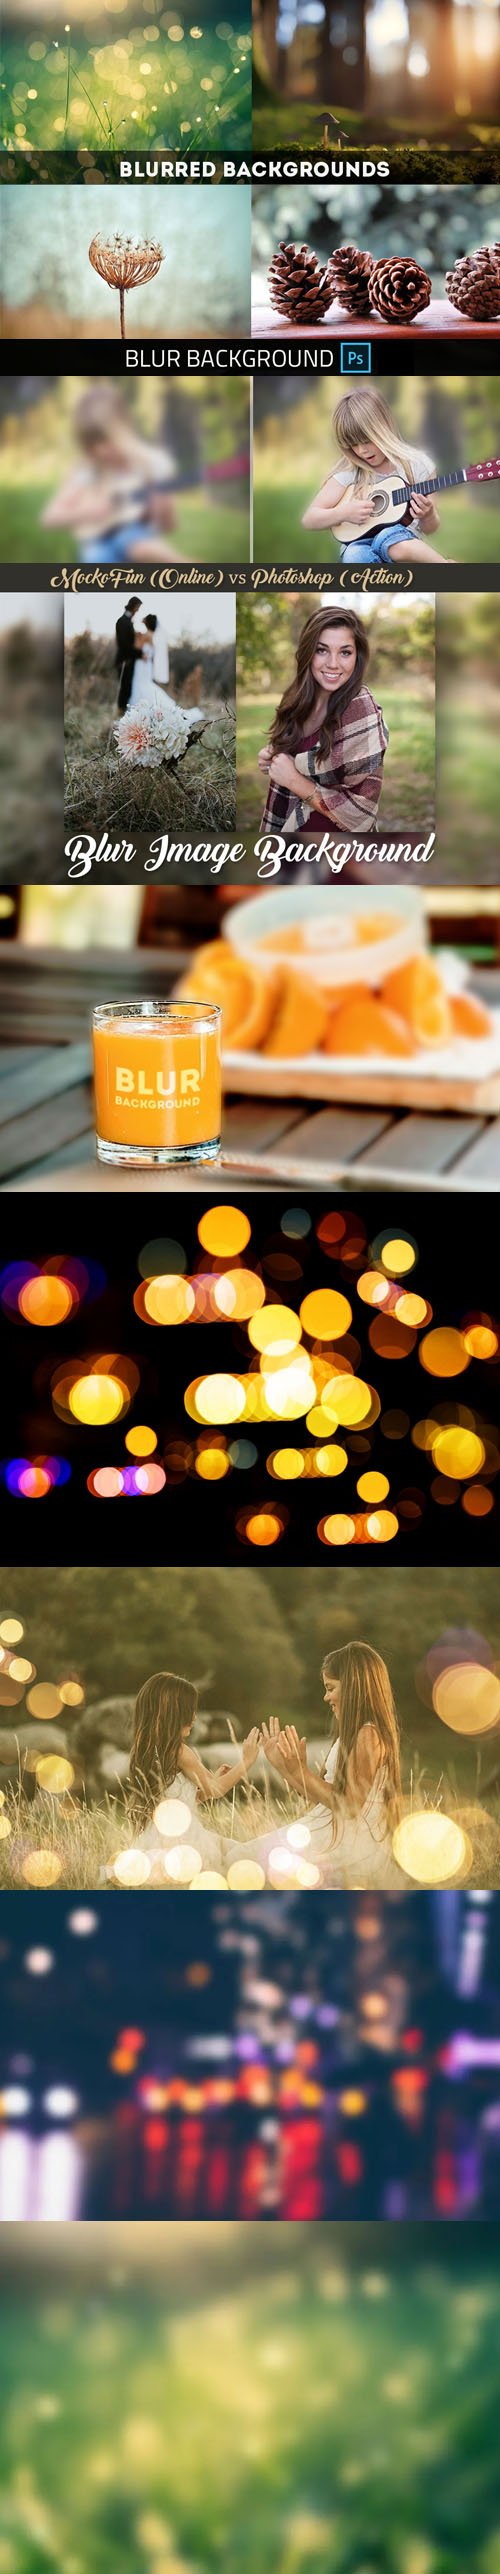 Blur Background - Photoshop Action